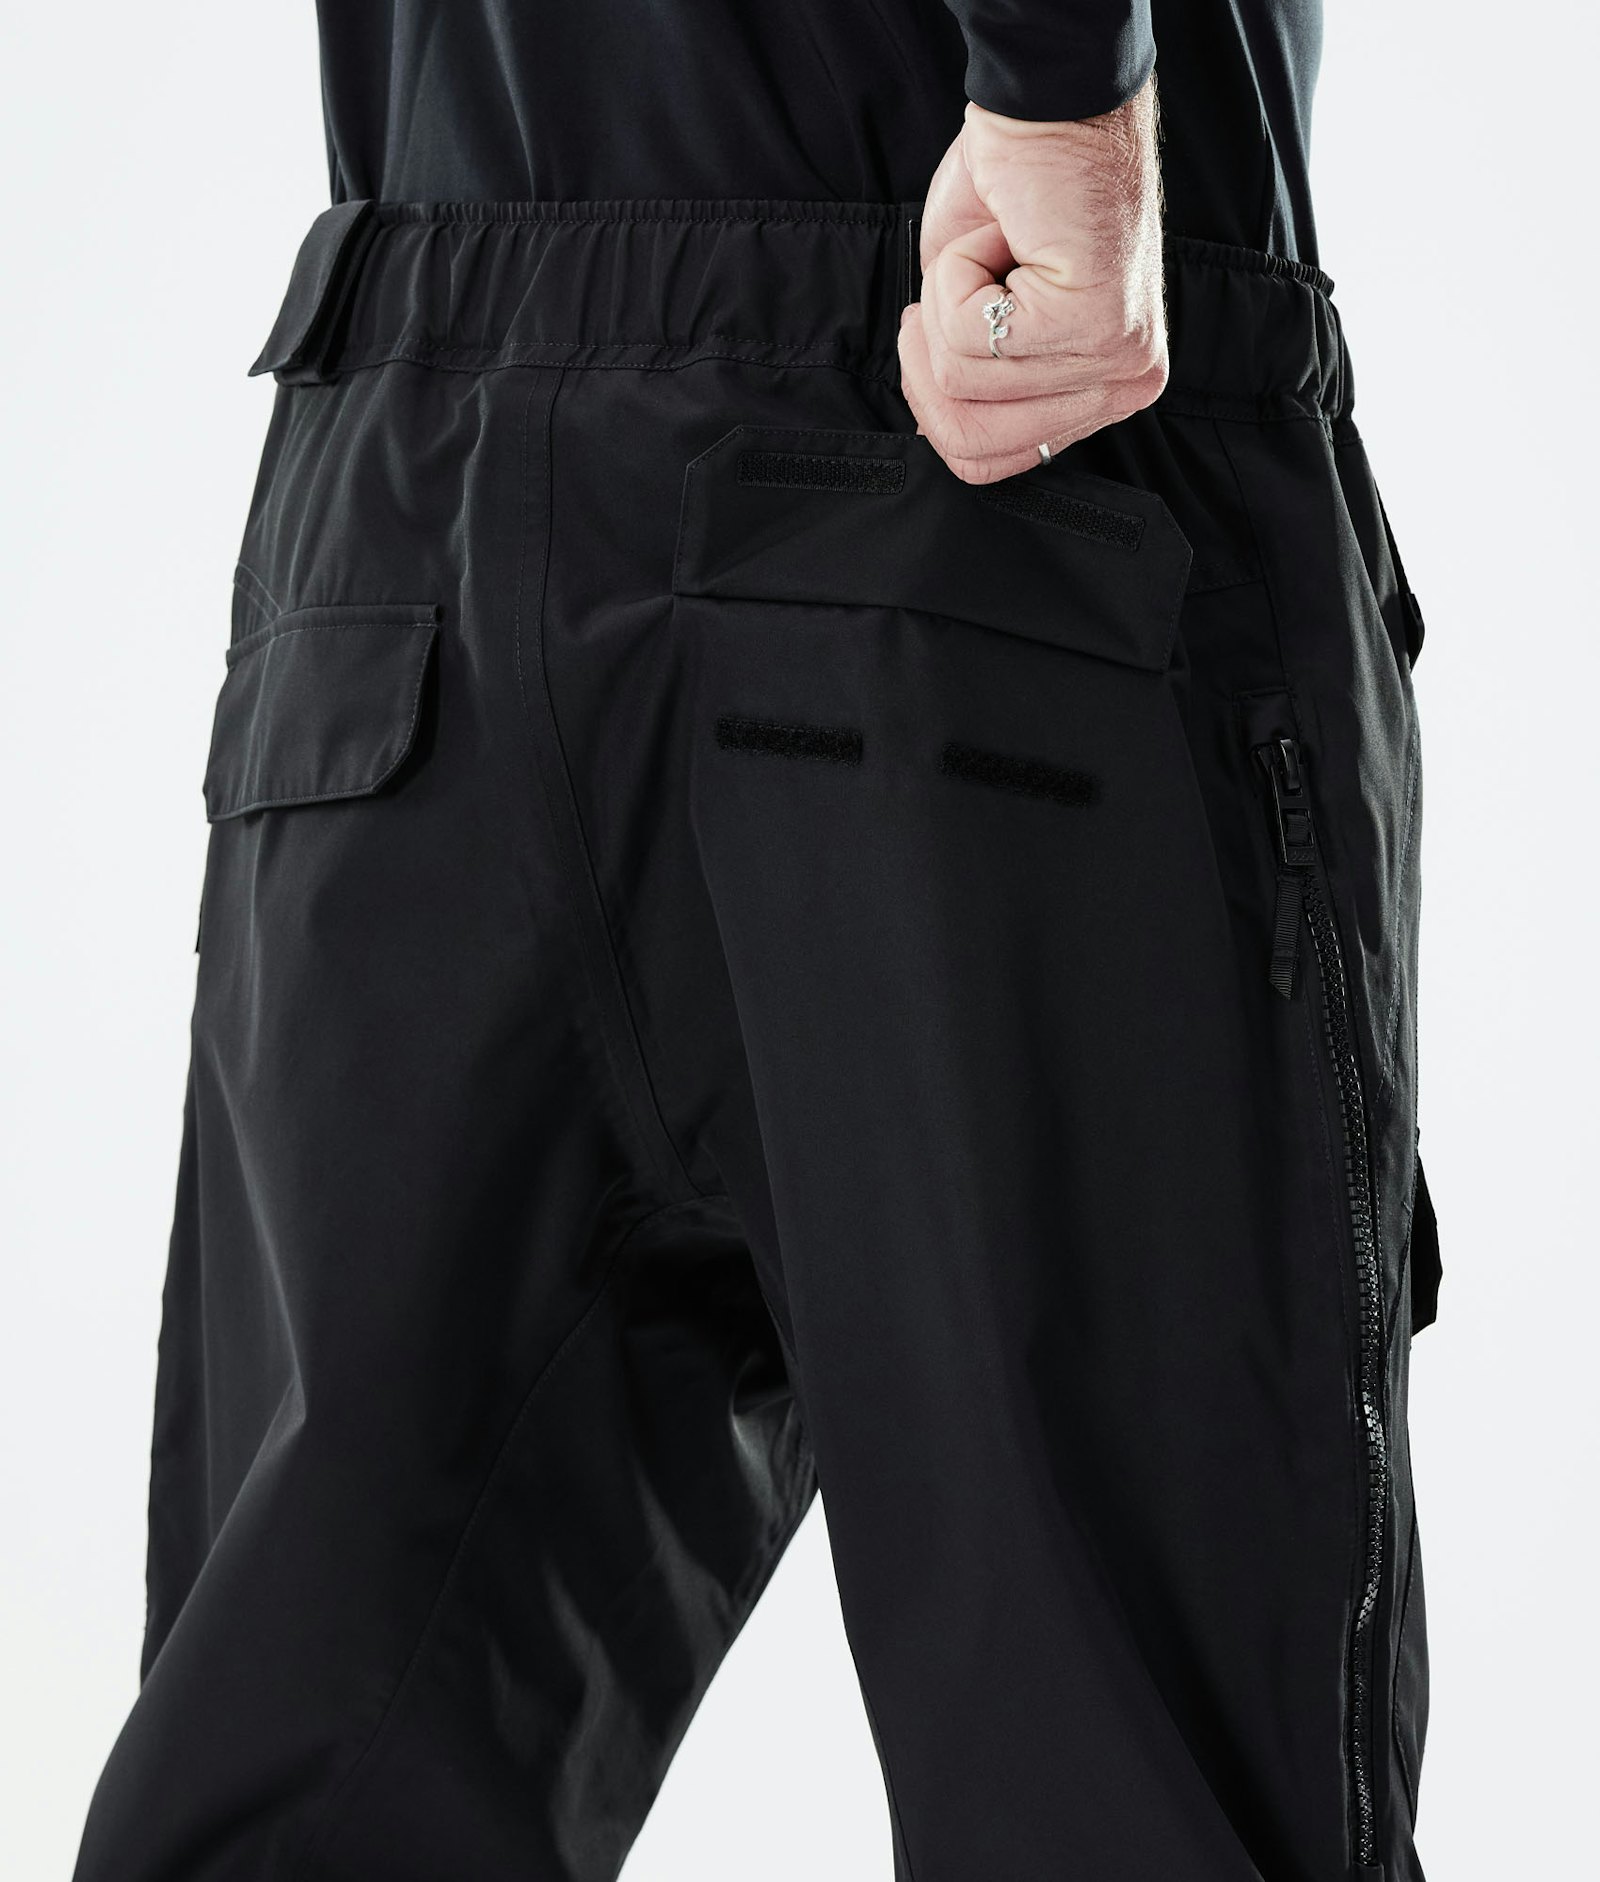 Antek 2021 Pantalon de Ski Homme Black, Image 6 sur 6